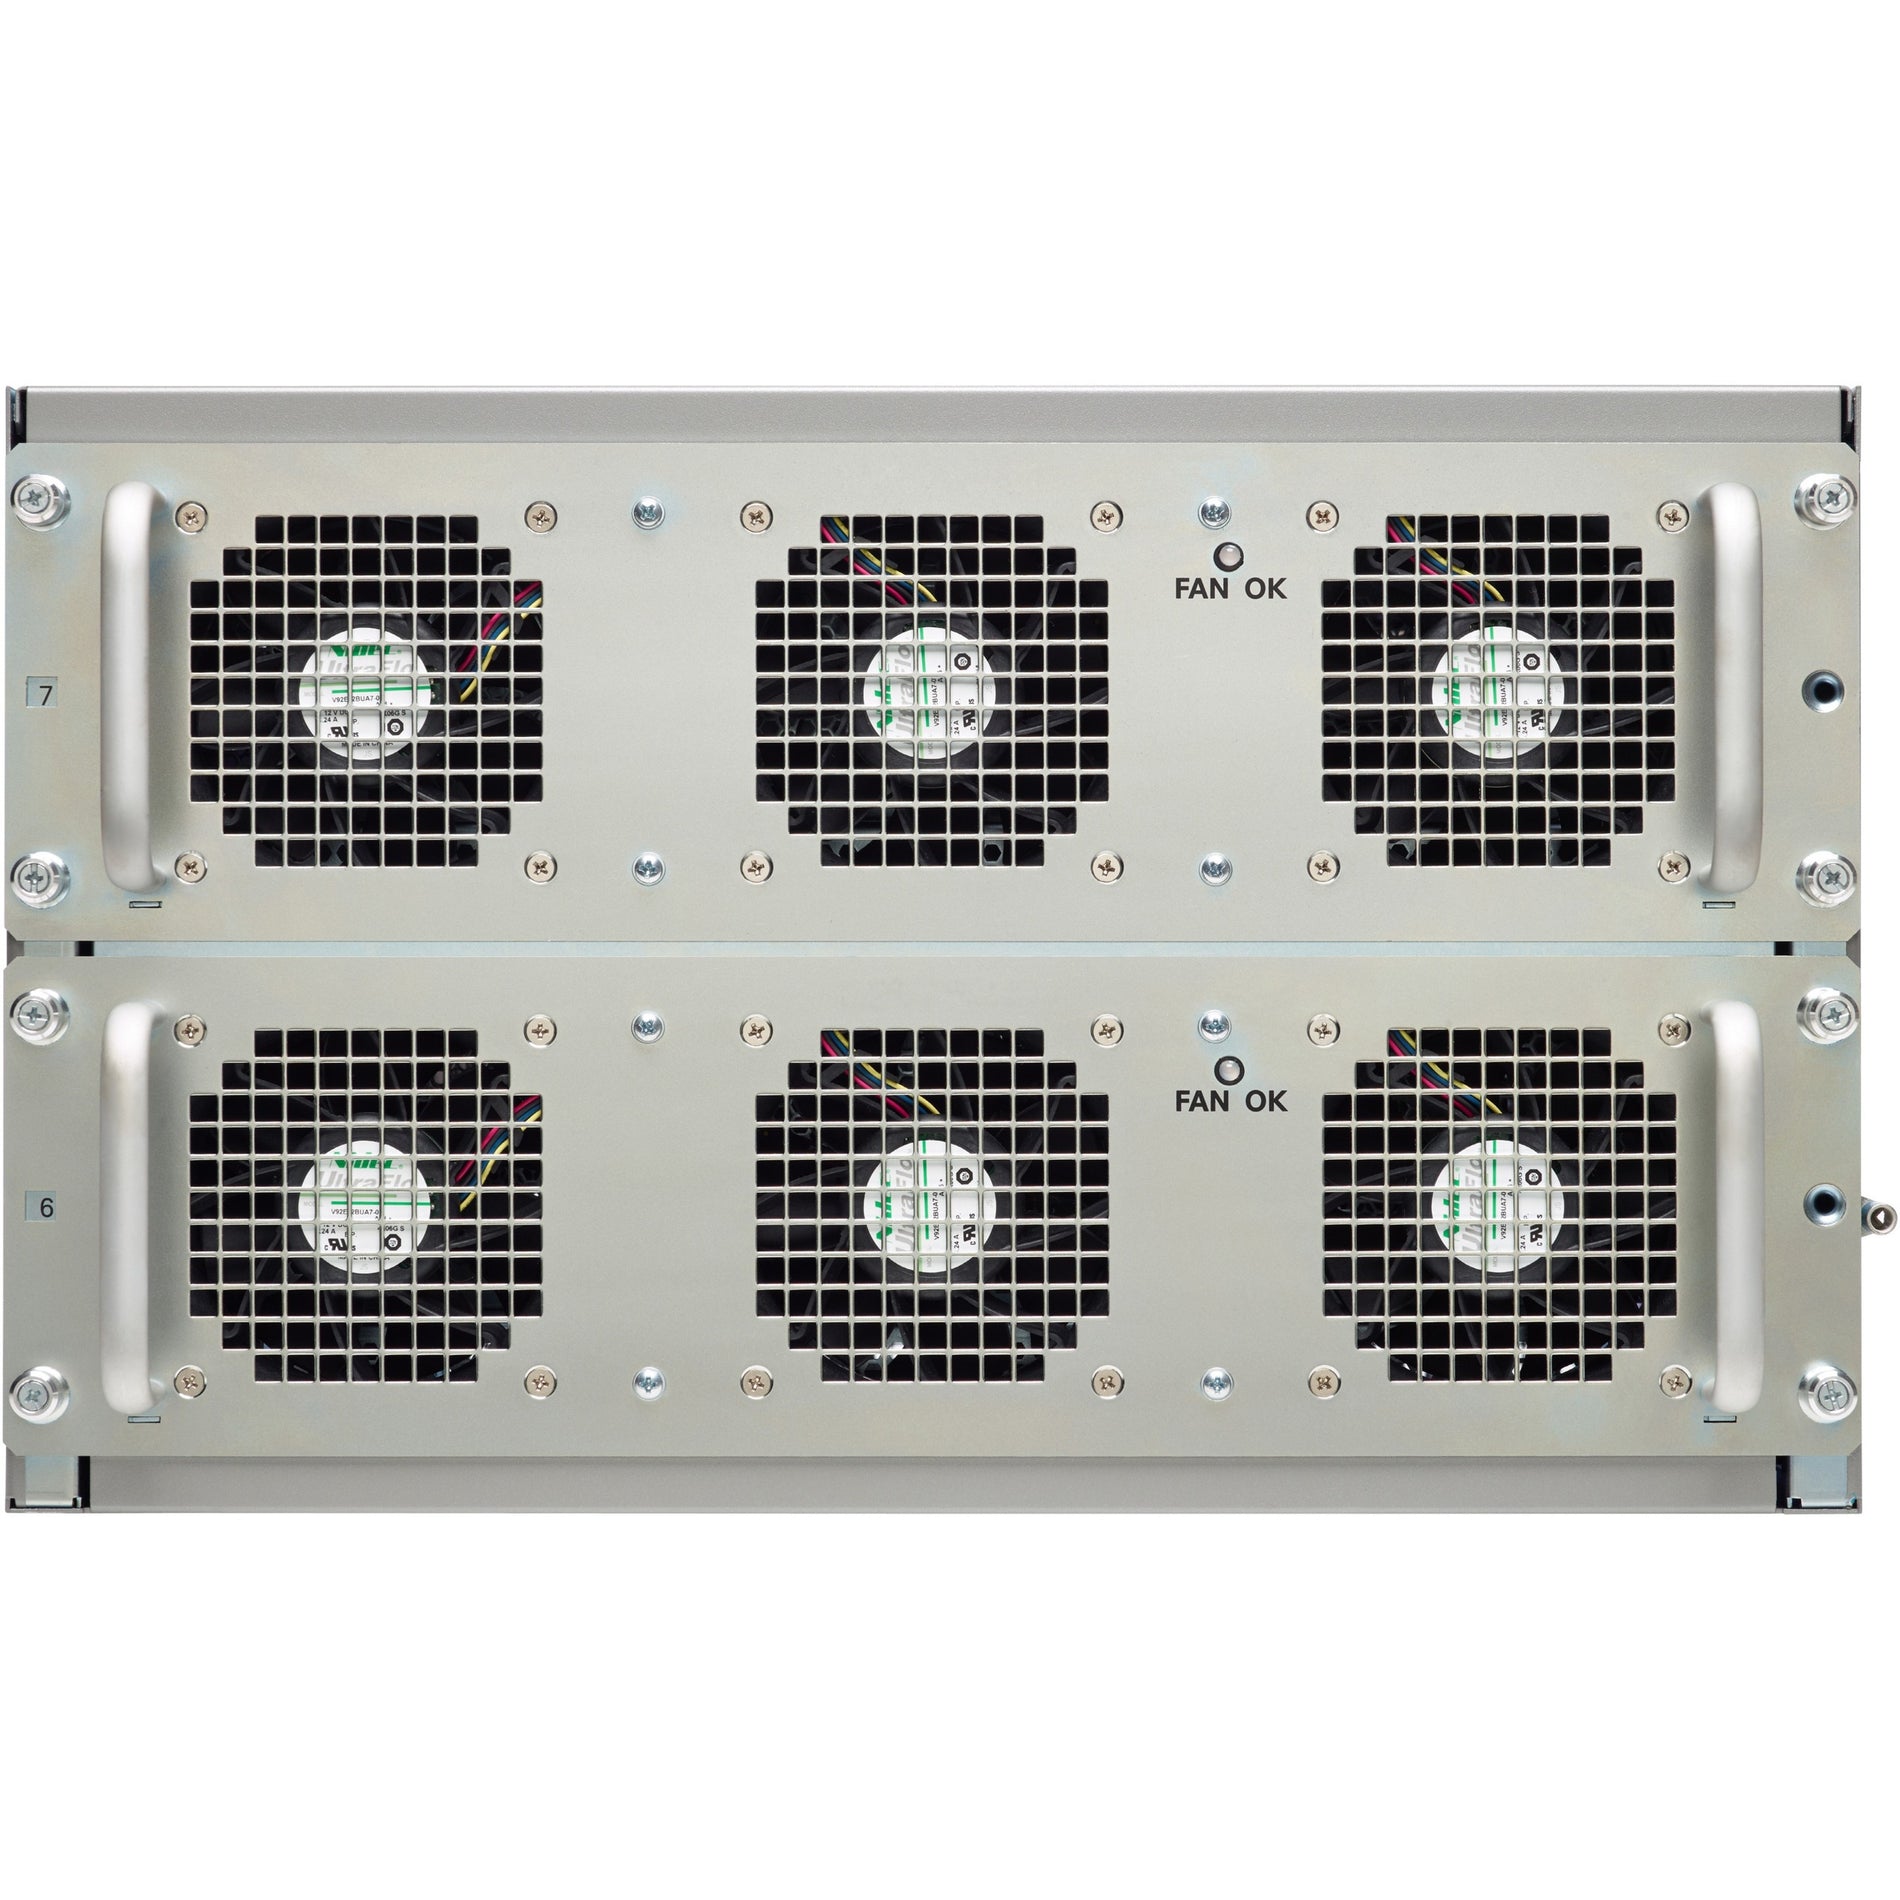 Cisco ASR 1006-X Aggregation Service Router (ASR1006-X)